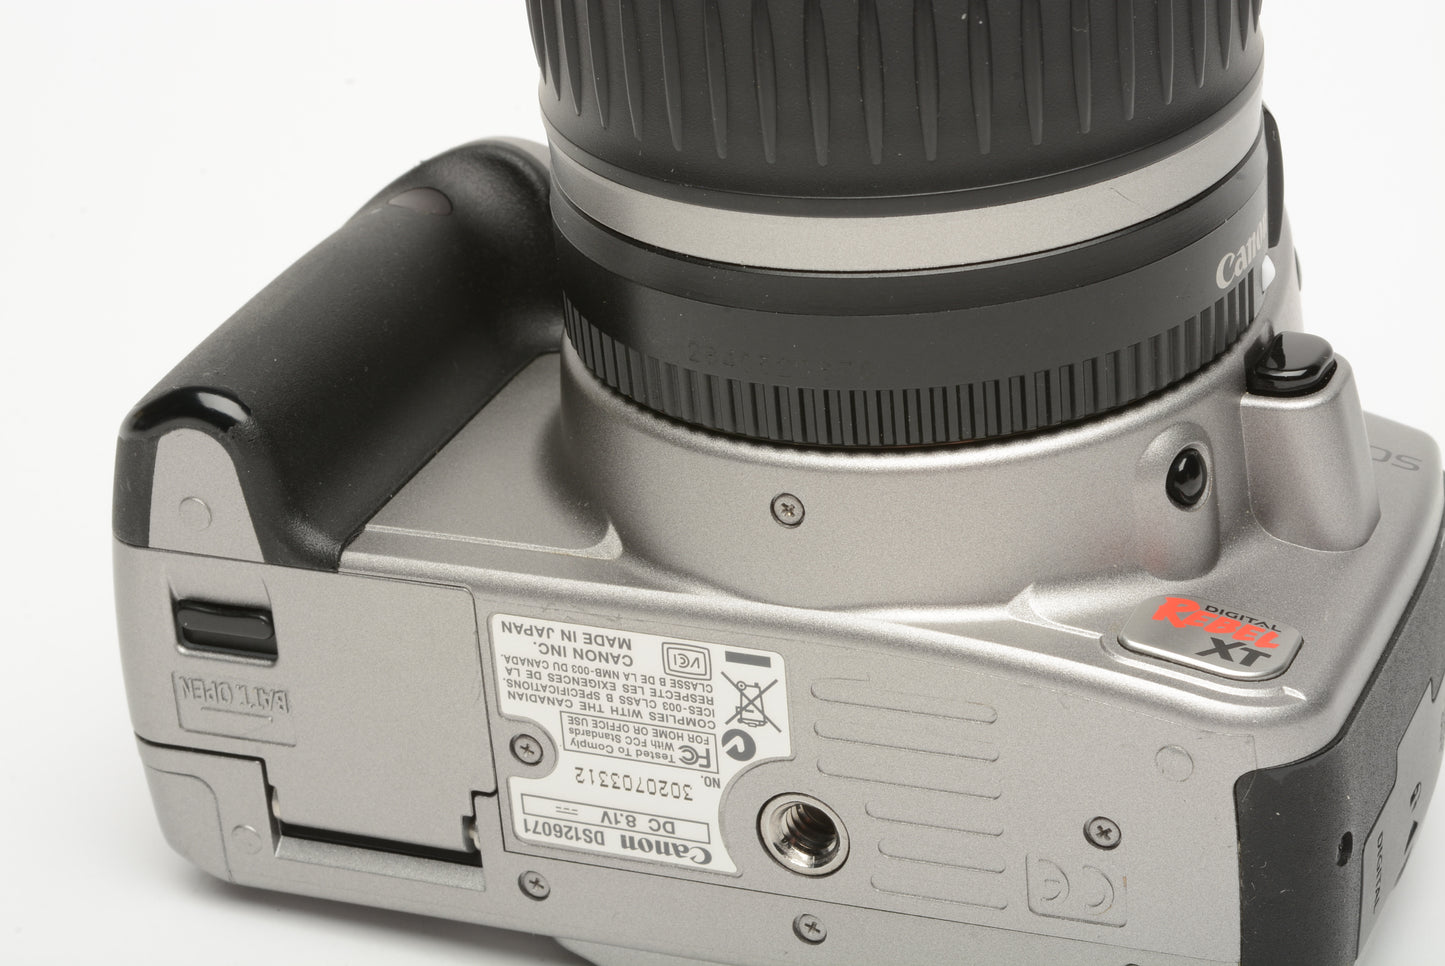 Canon EOS Digital Rebel DSLR w/18-55mm f3.5-5.6 zoom lens, 2batts, charger CF card++++